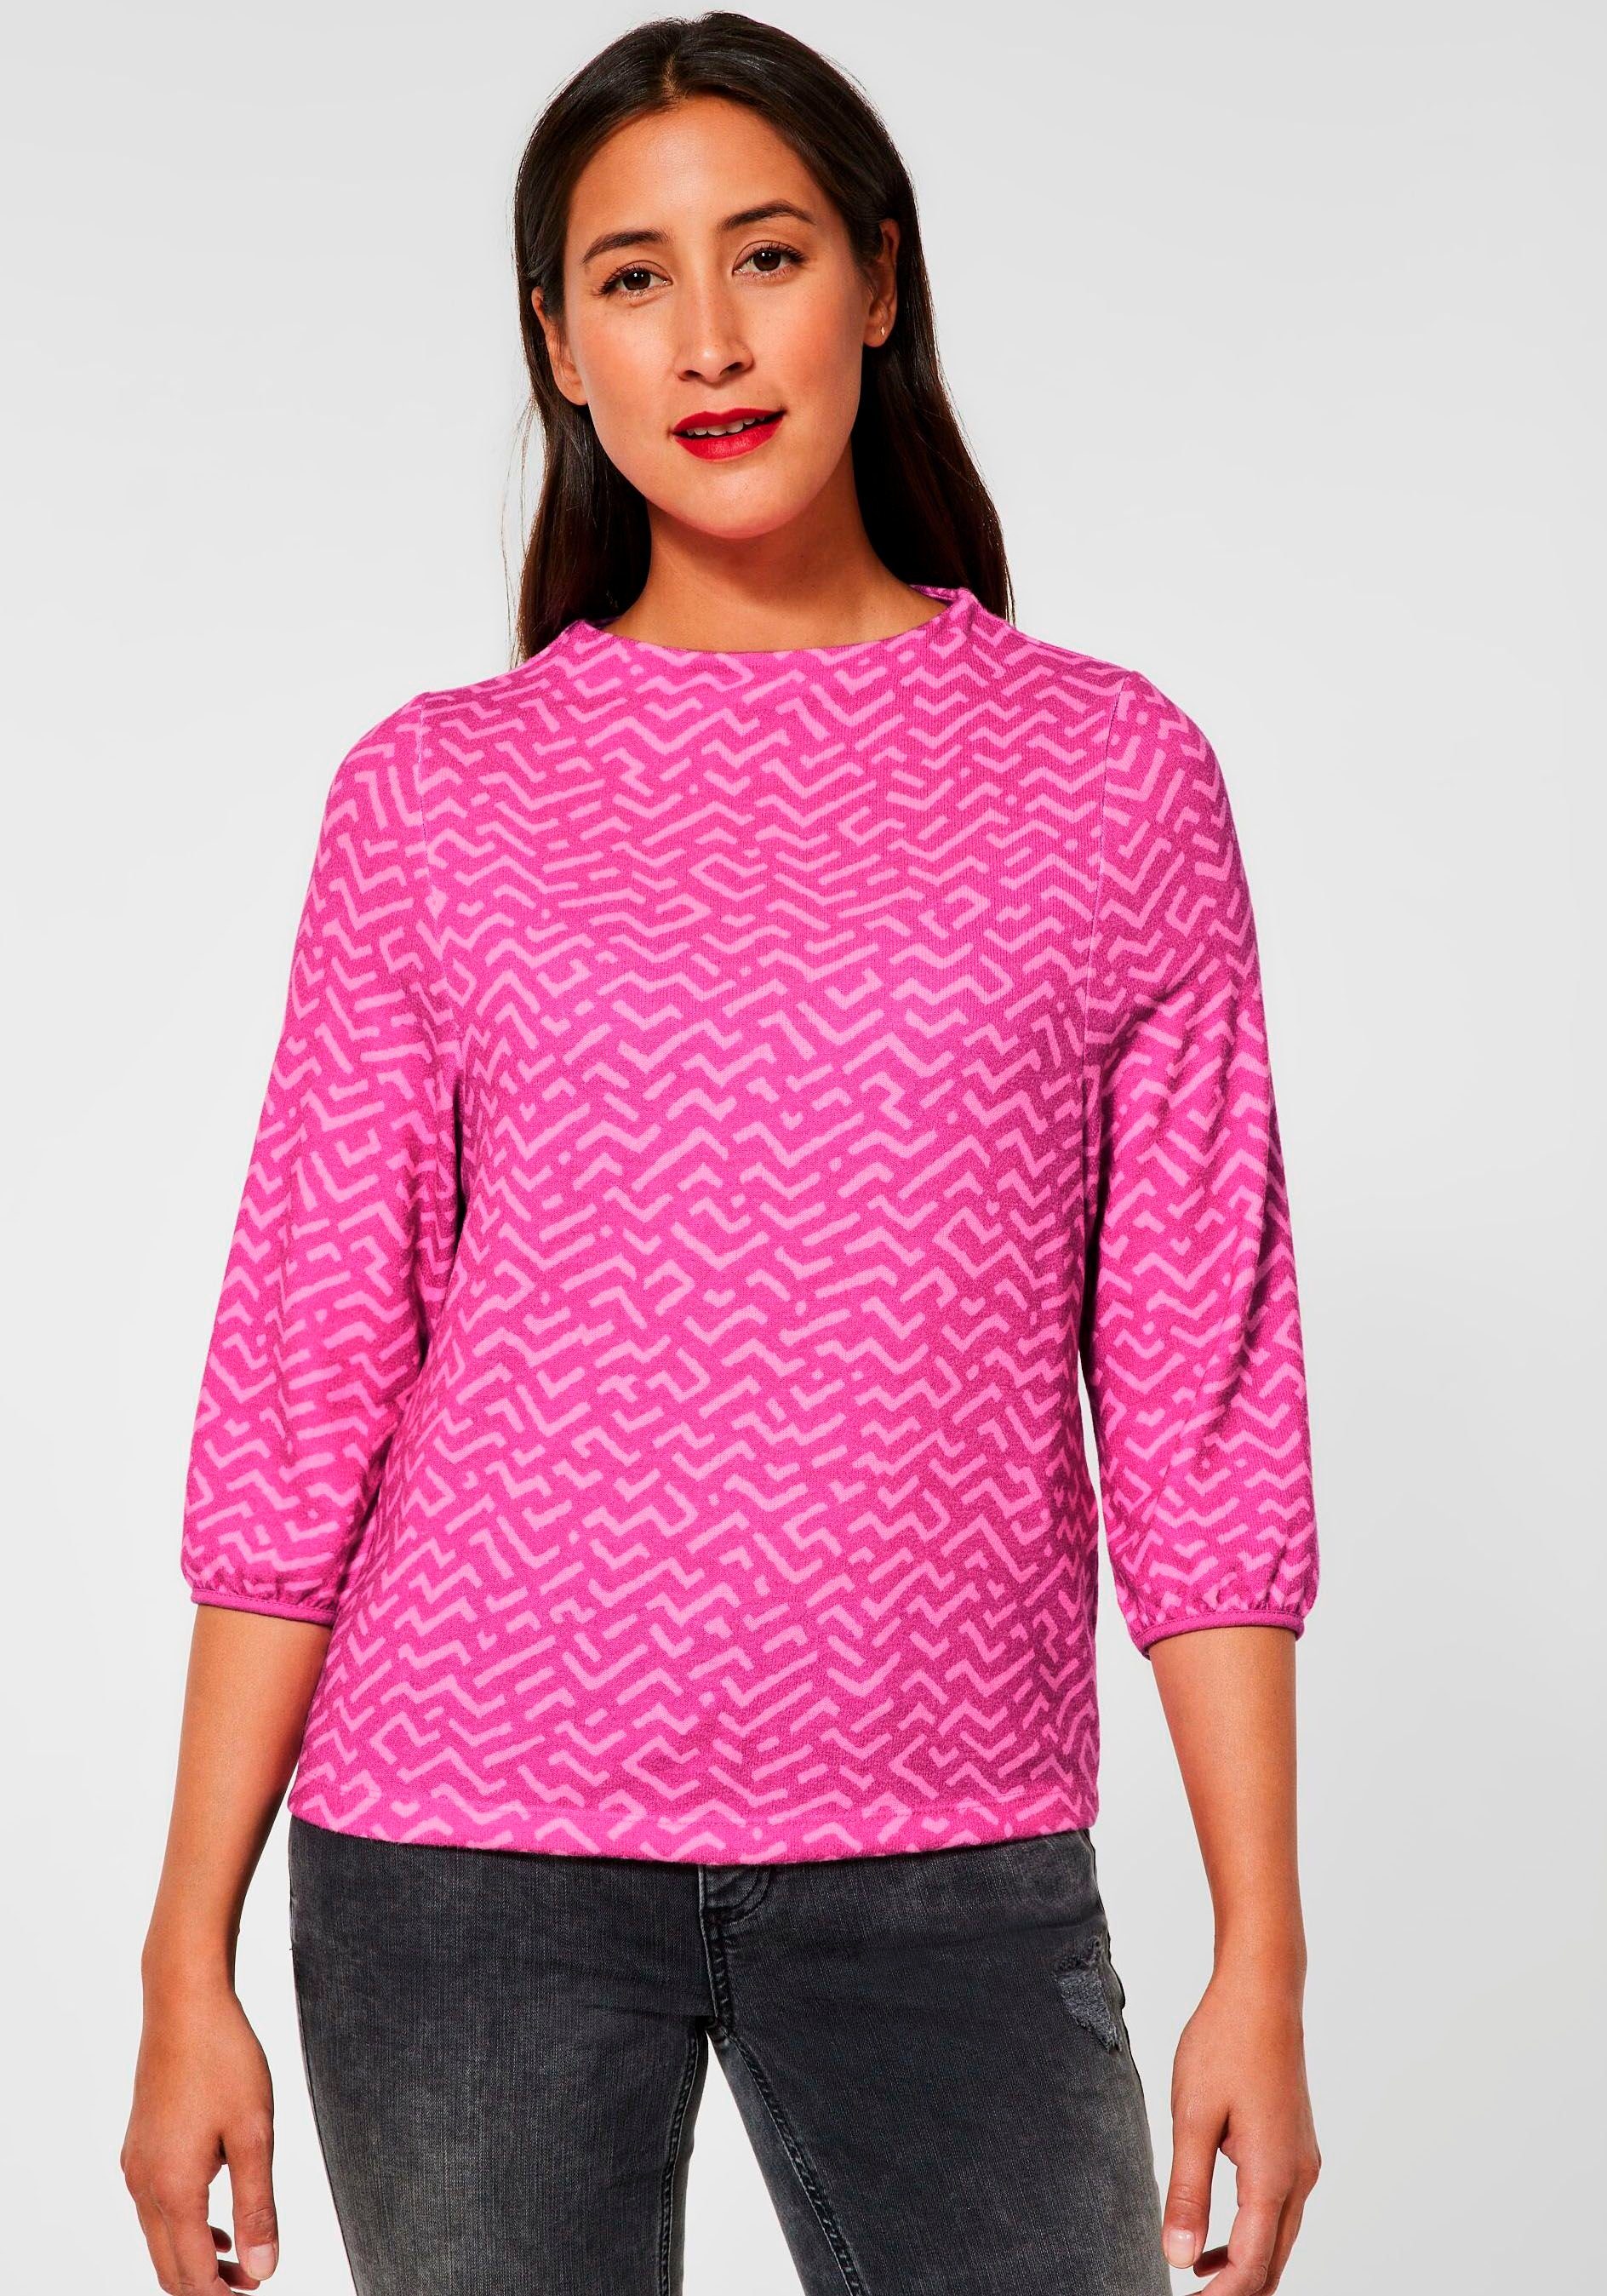 STREET ONE Print-Shirt mit Zick-Zack-Muster pink lavish